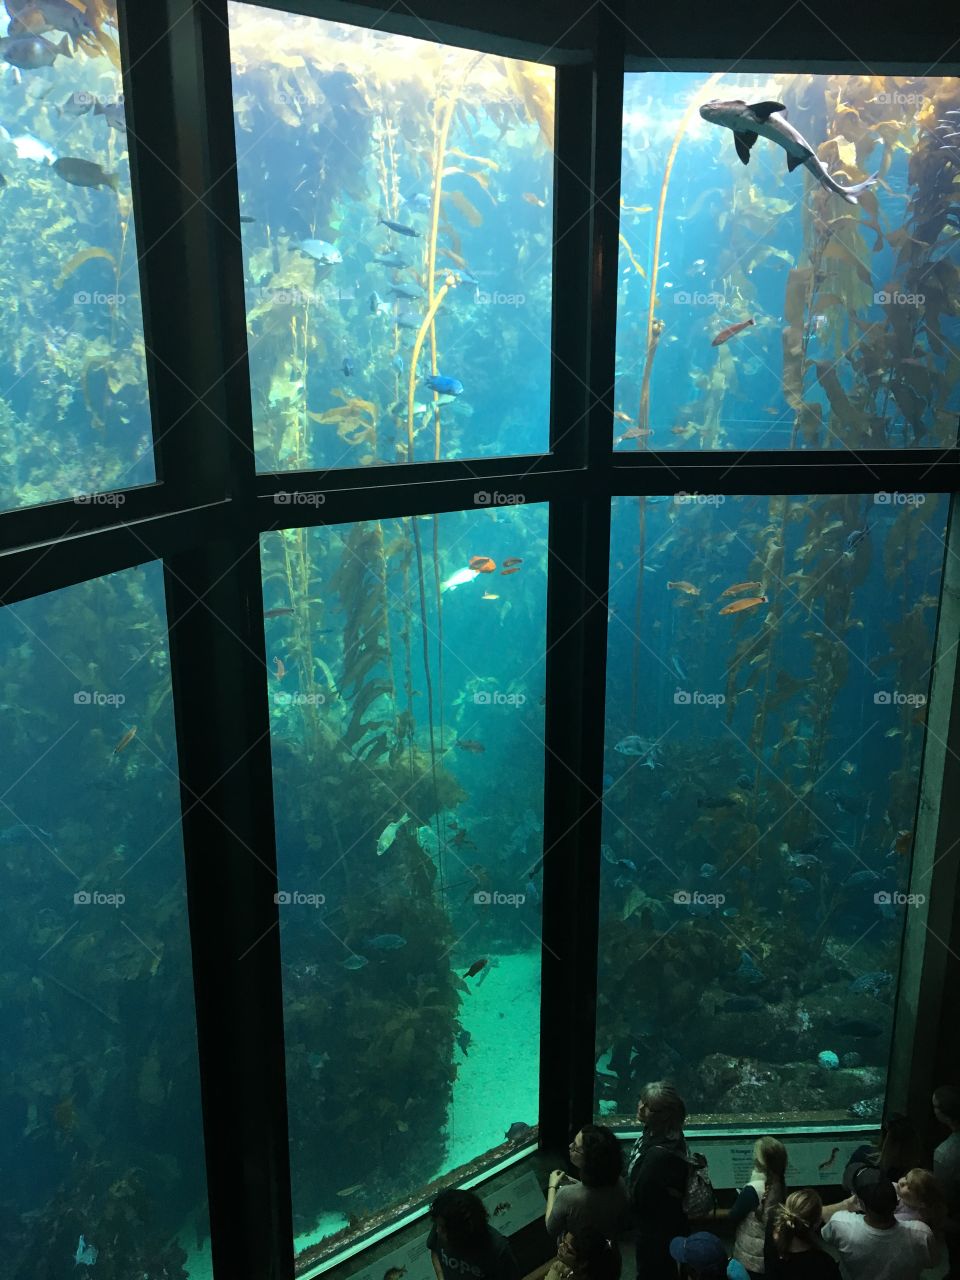 Two story aquarium tank containing kelp, a shark, and a school of fish at the Monterey Bay Aquarium